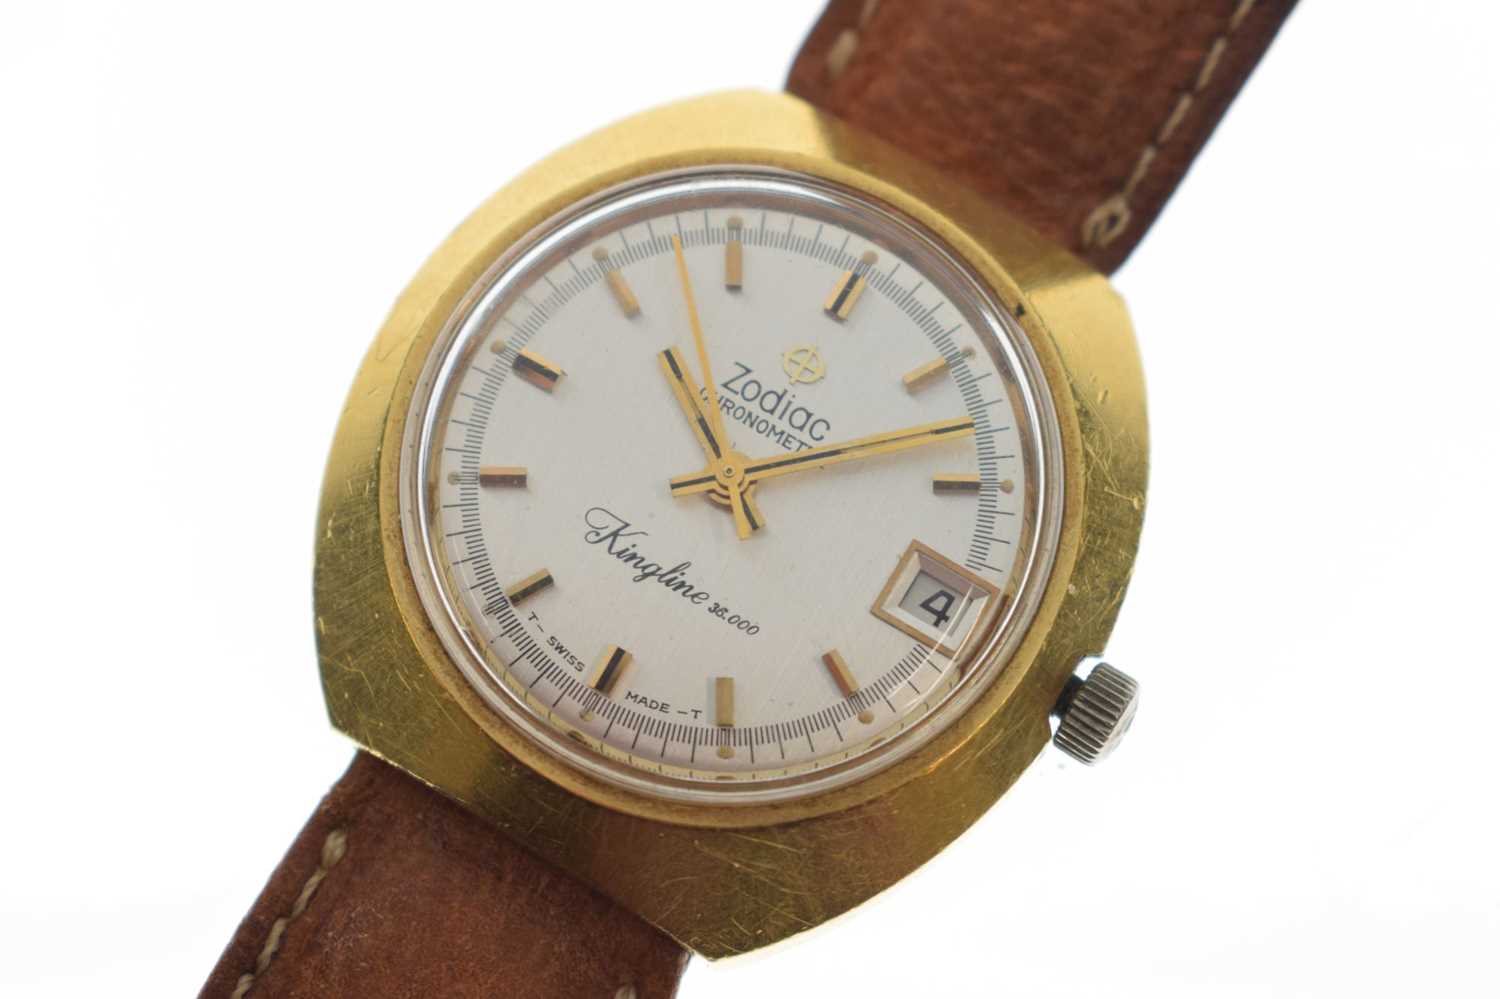 Zodiac - Gentleman's 'Kingline' Chronometer gold-plated cased wristwatch - Image 3 of 6